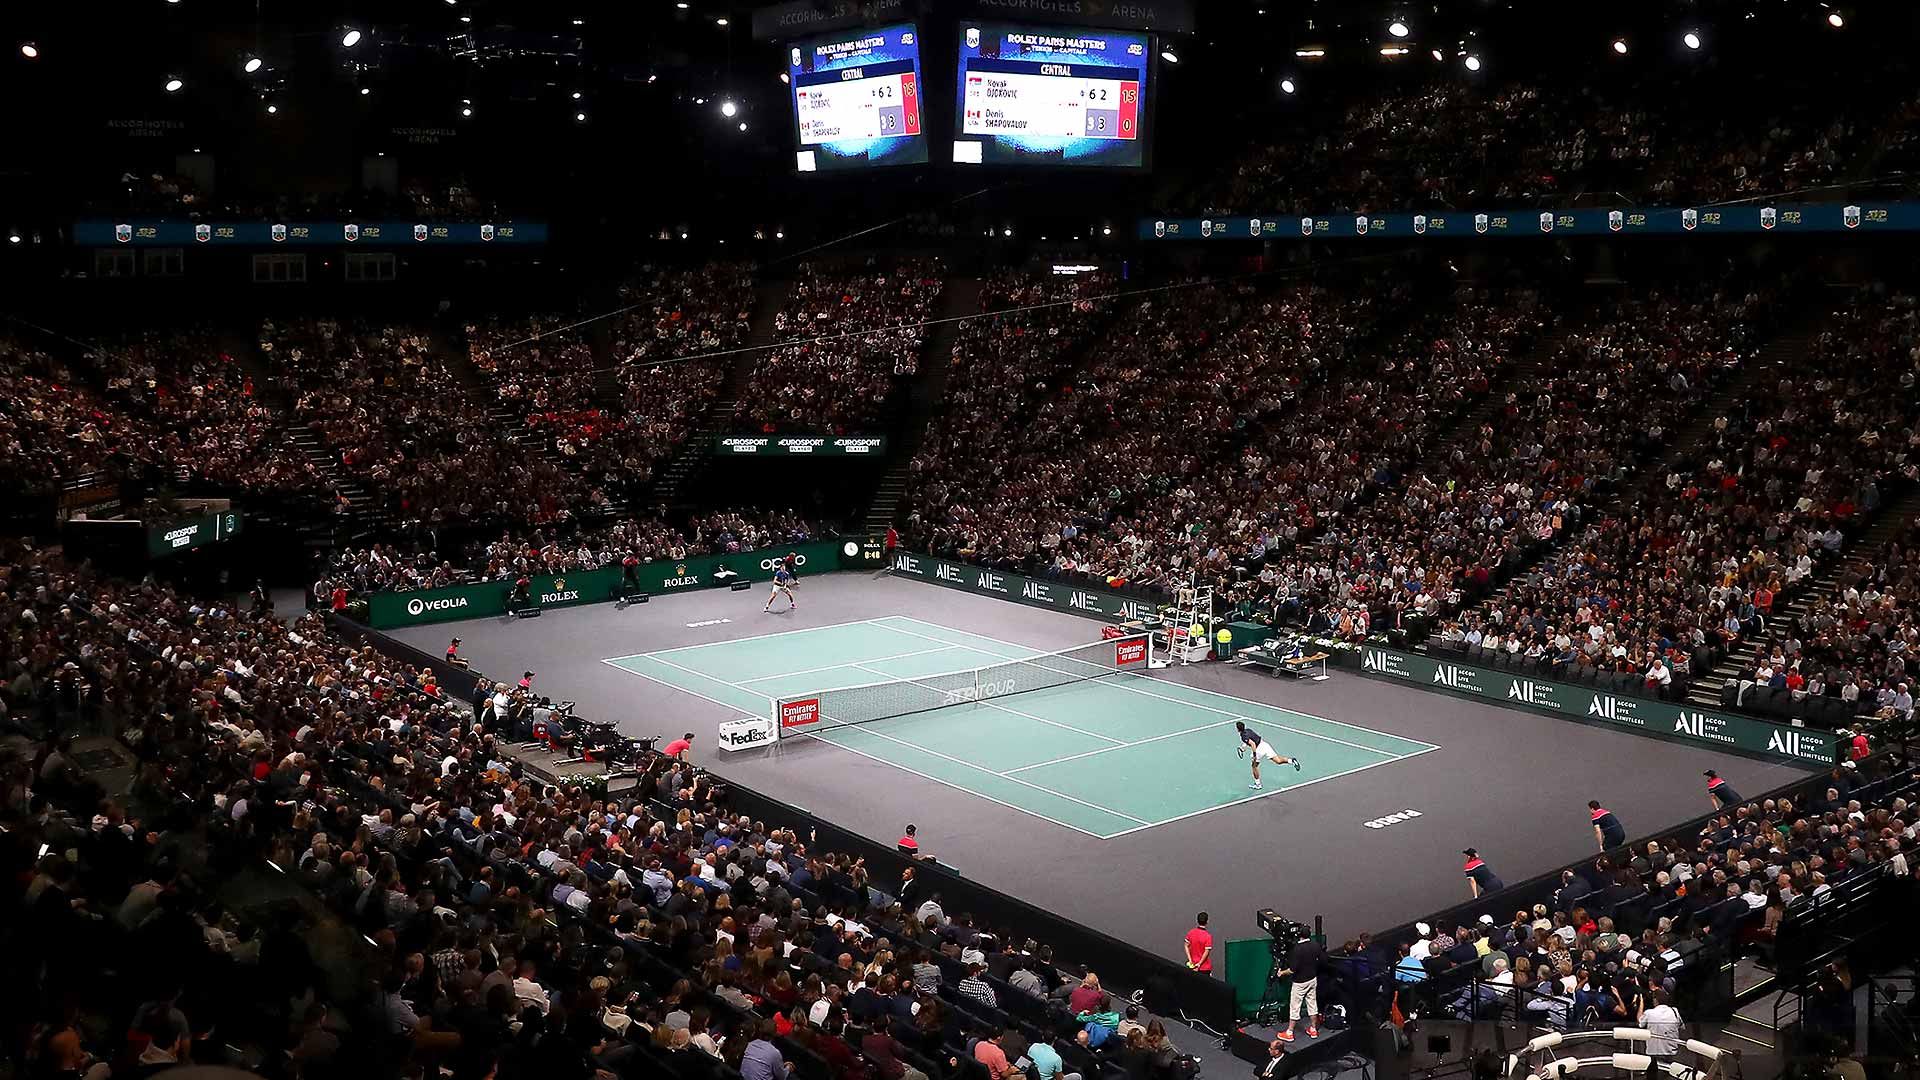 L'arena di Bercy, ospita il torneo da 38 anni